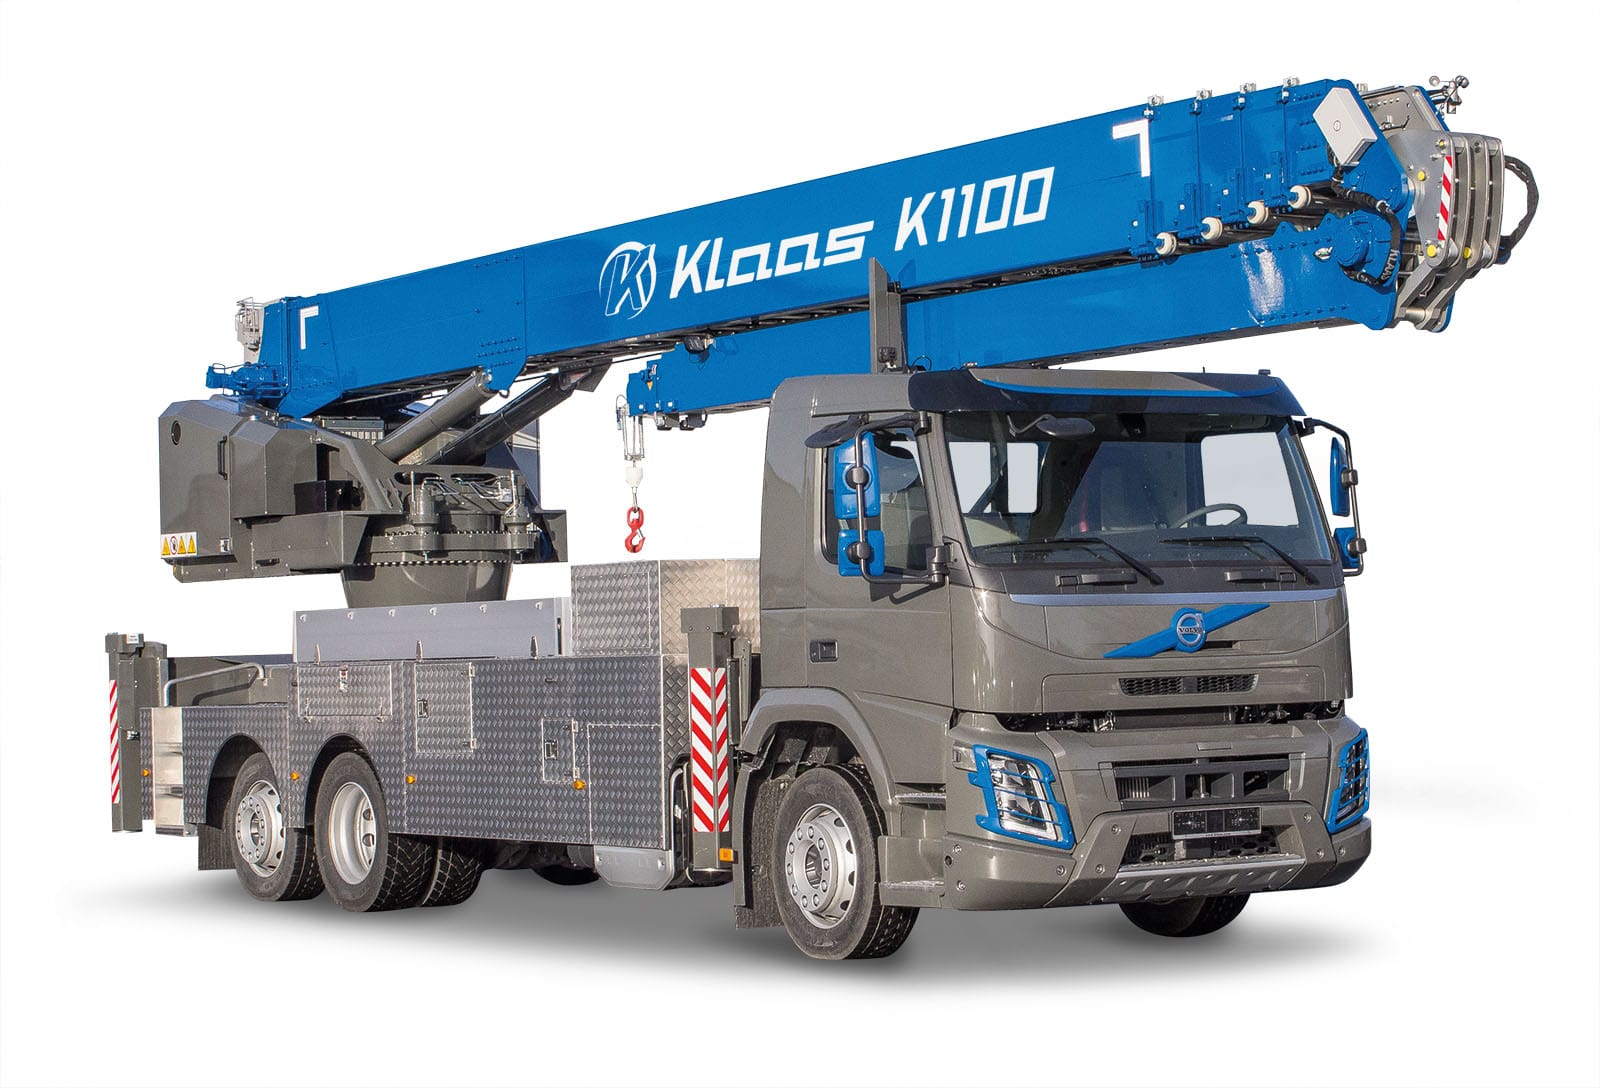 K1100 - Klaas - trailer cranes, mobile cranes, furniture lifts